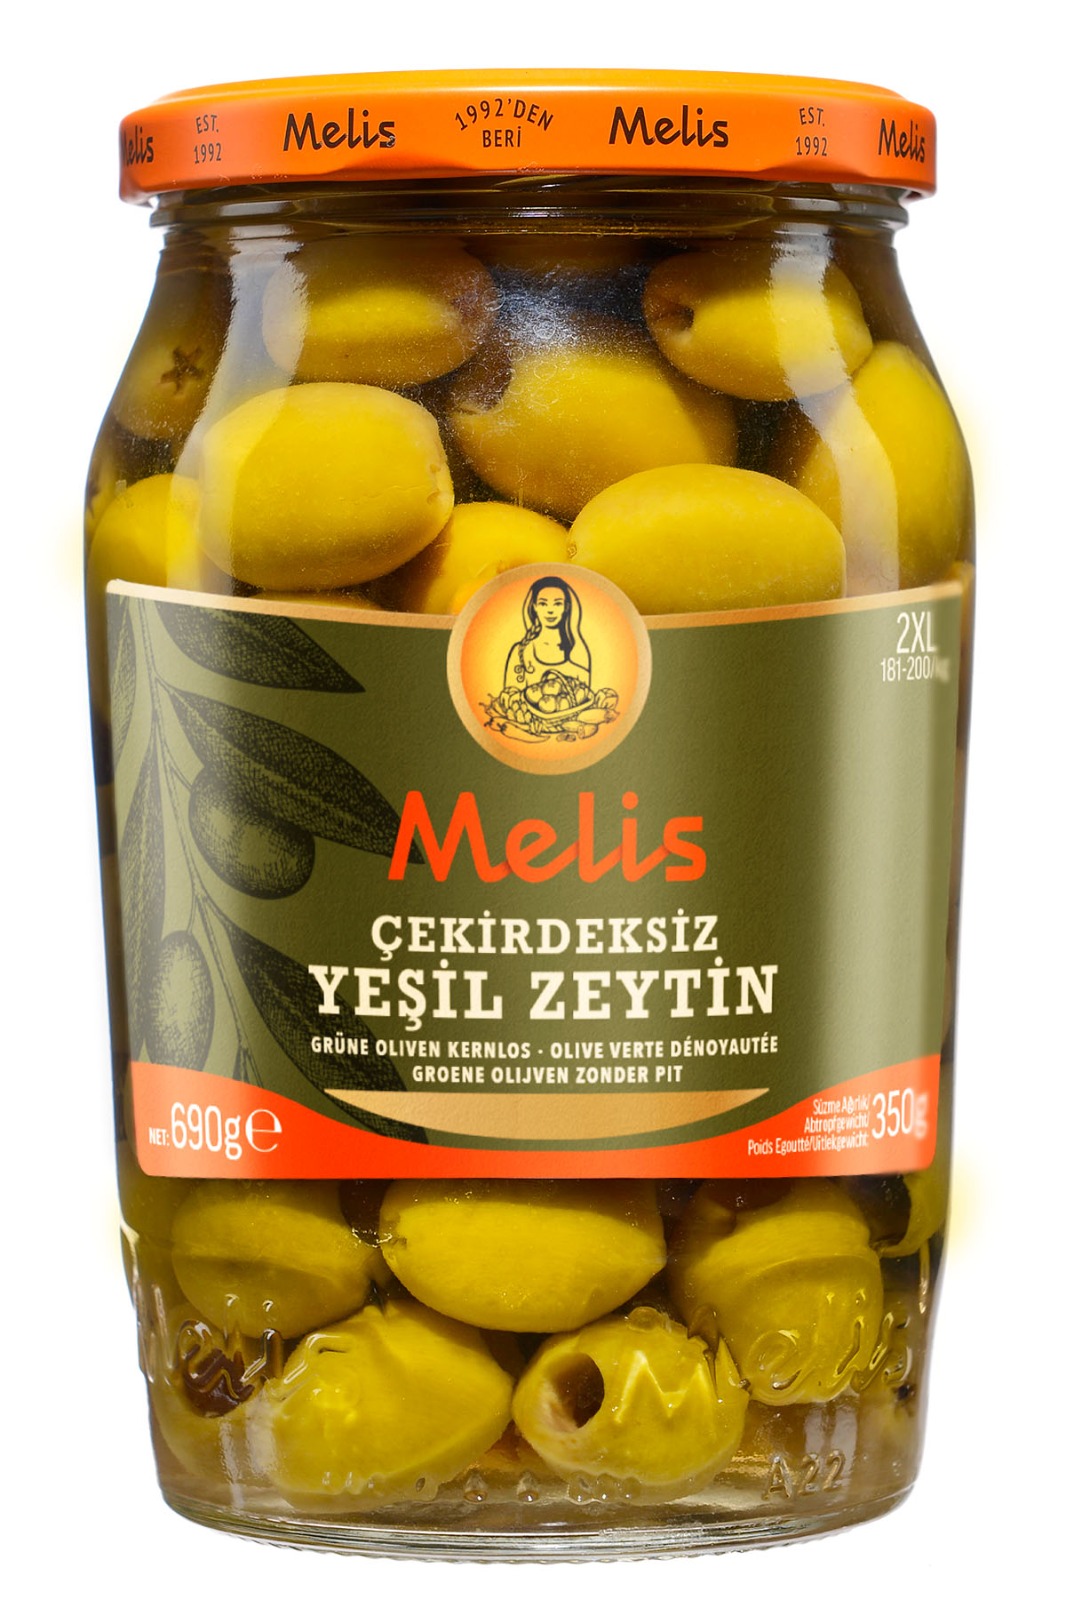 MELIS Y.ZEYTIN CEKIRDEKSIZ 12x720ml (olives vertesdenauyautés)